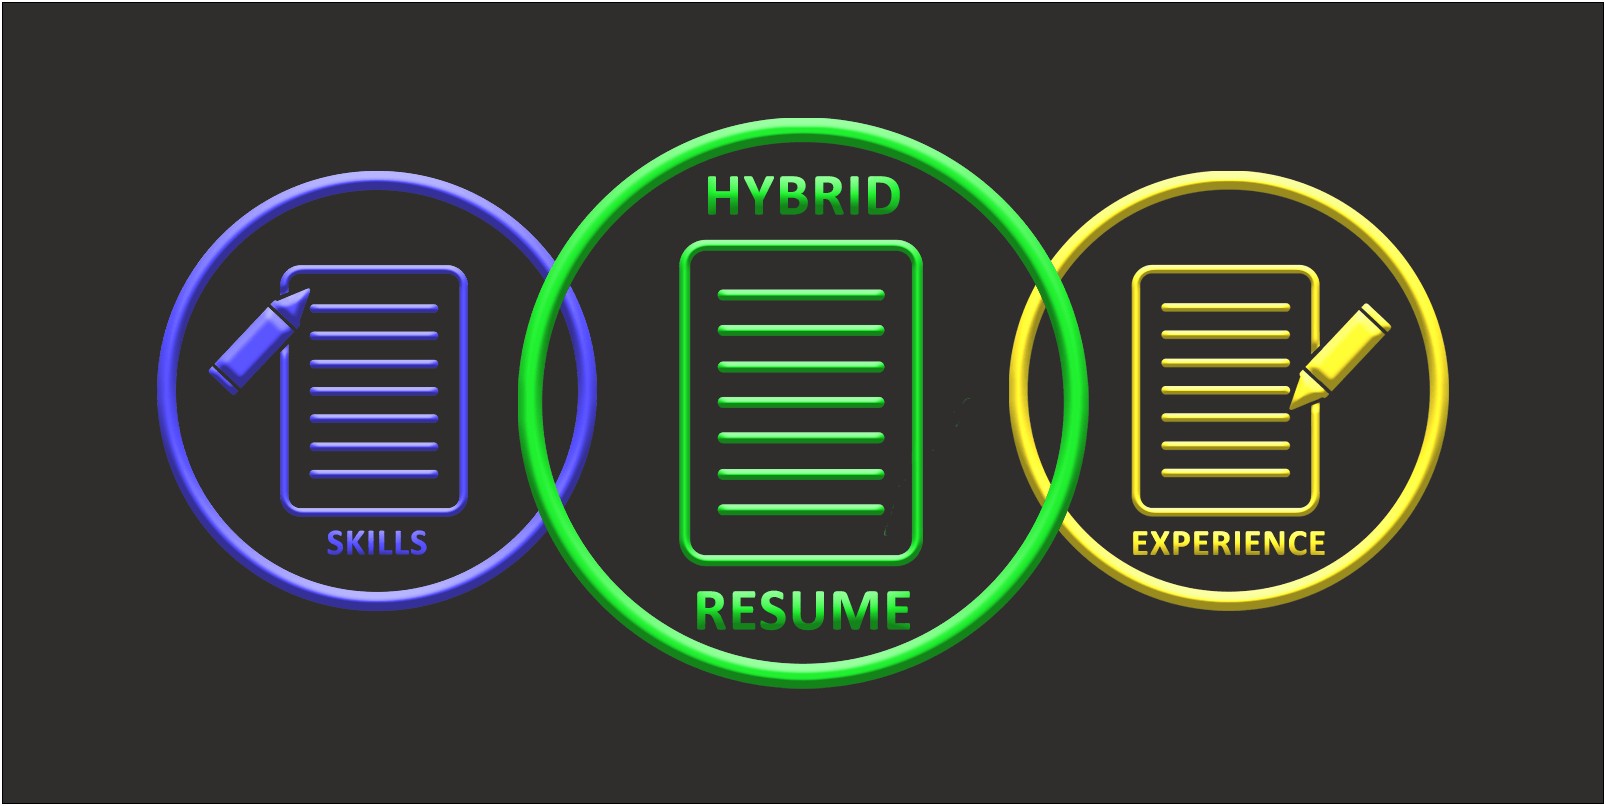 Hybrid Resume Sales Executive Examples 2019